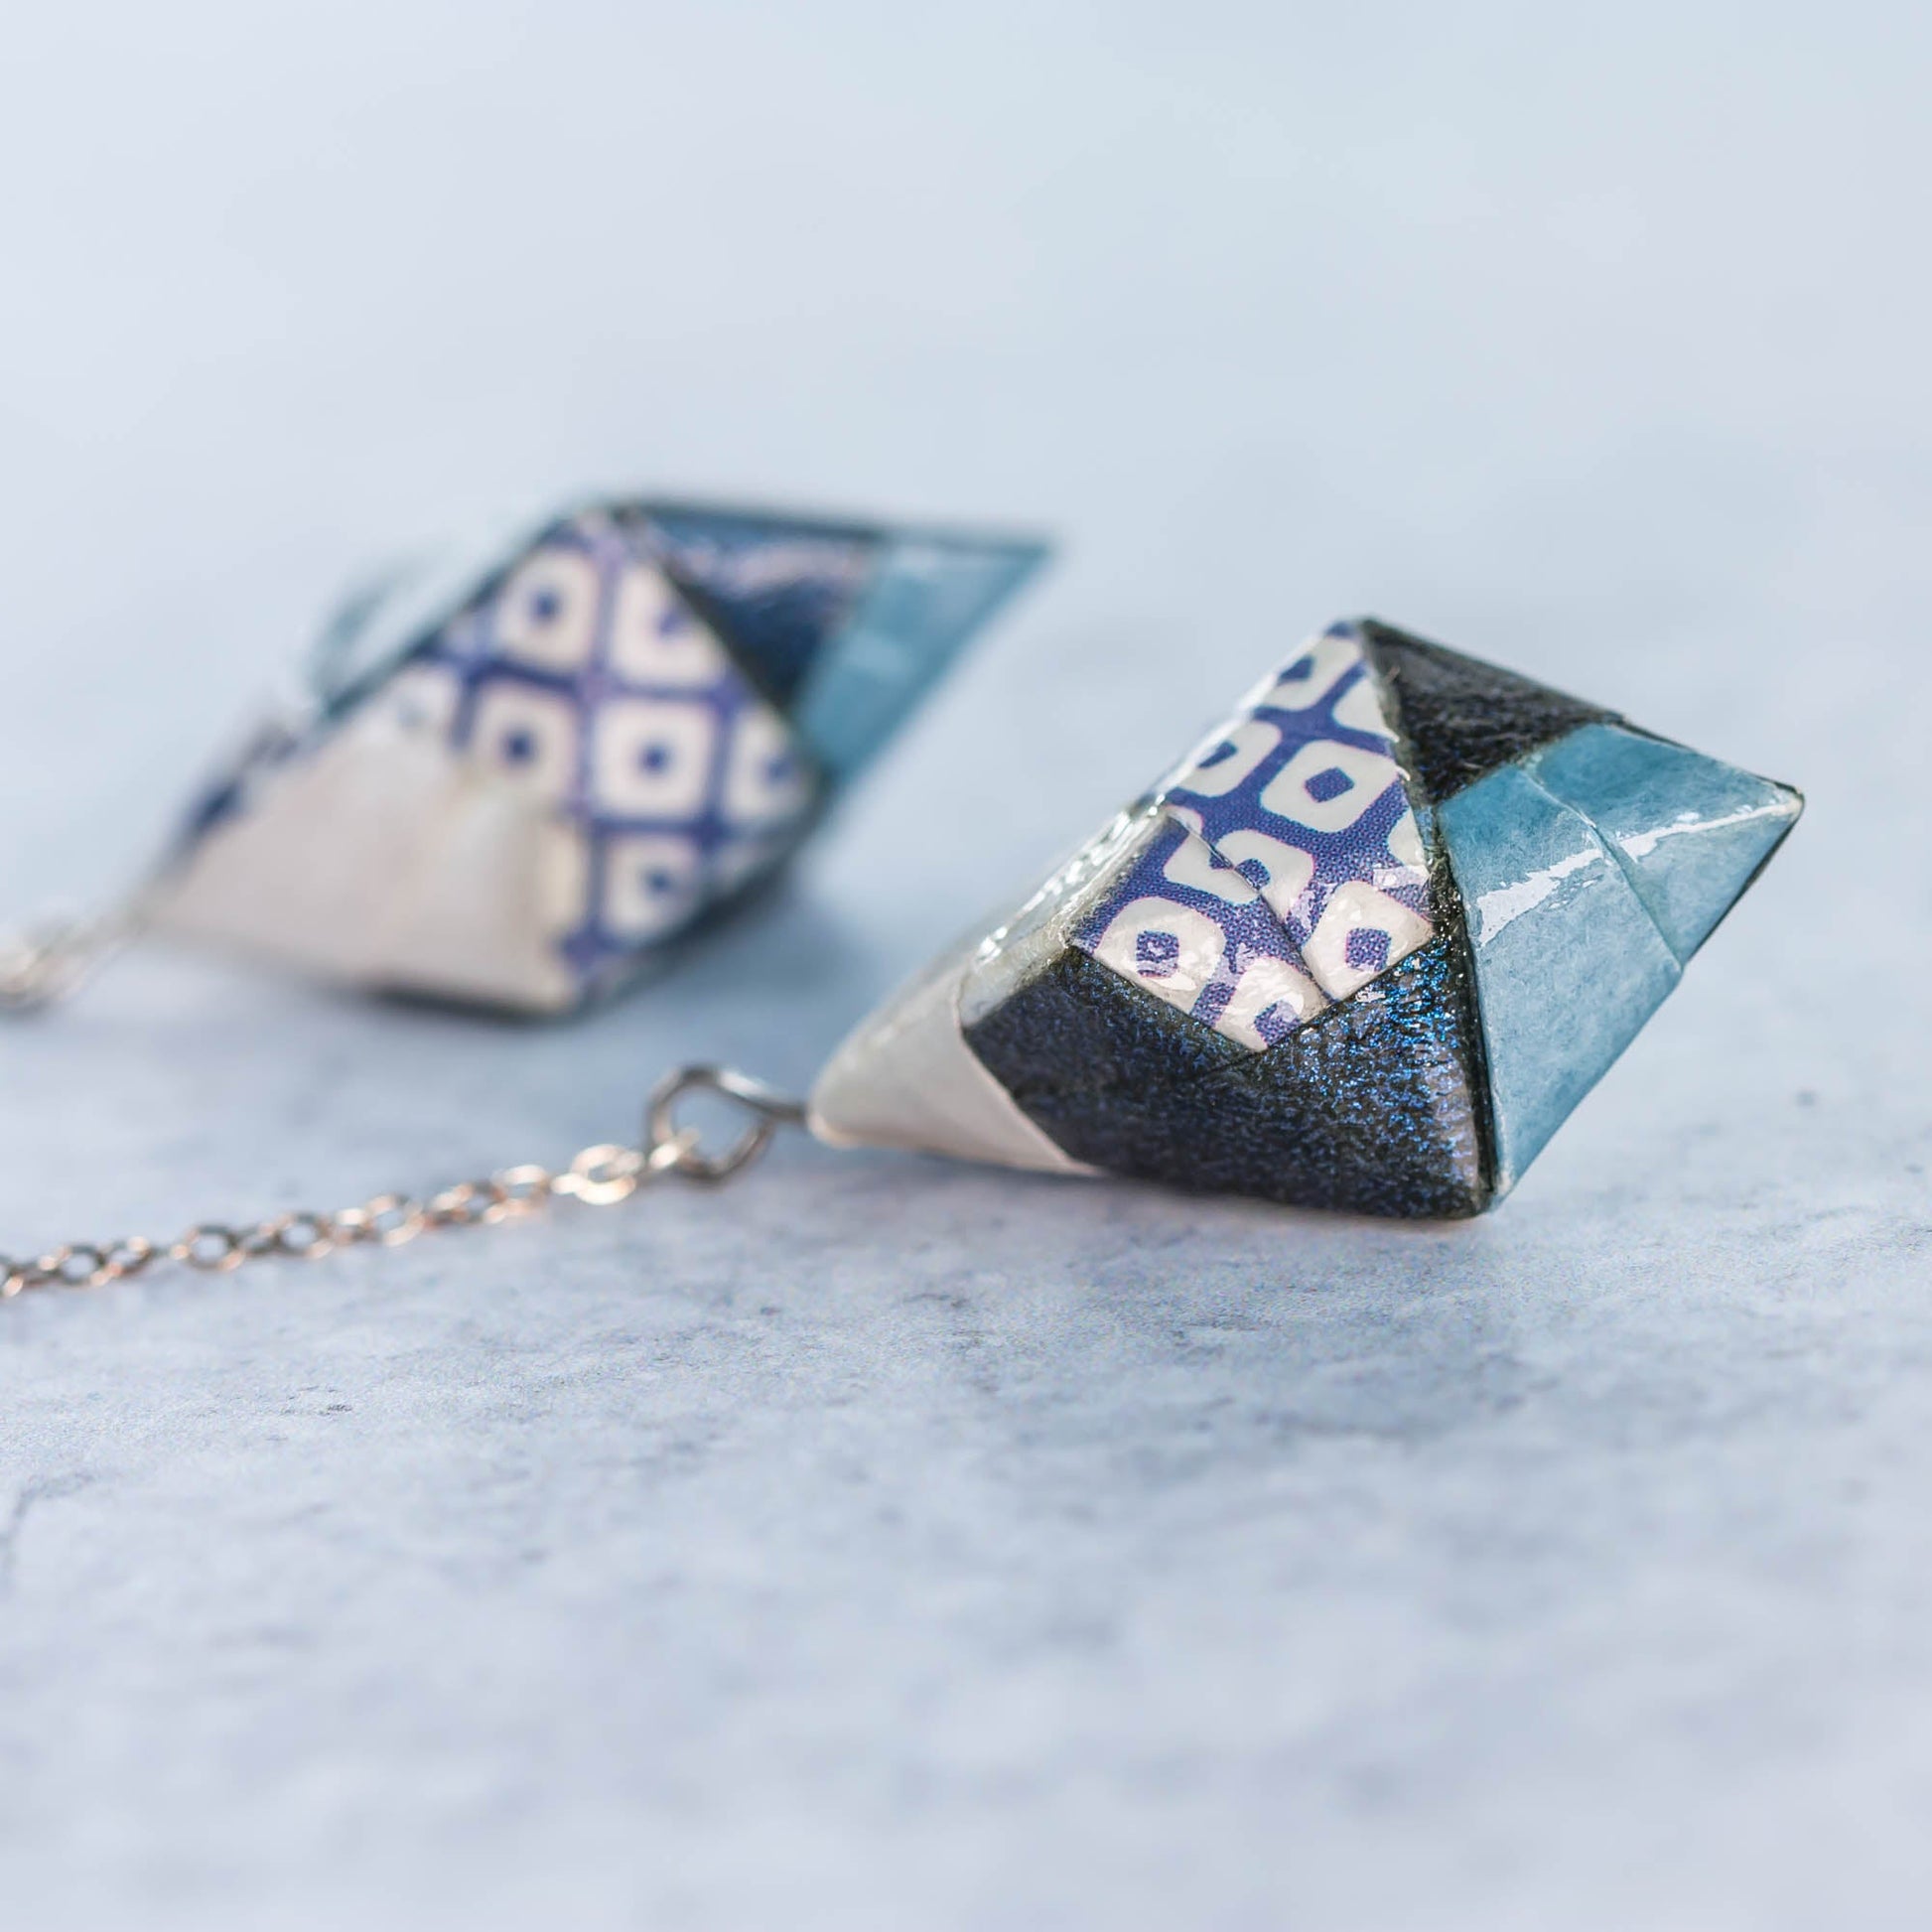 Origami Diamond Paper Earrings - Blue White - By LeeMo Designs in Bend, Oregon